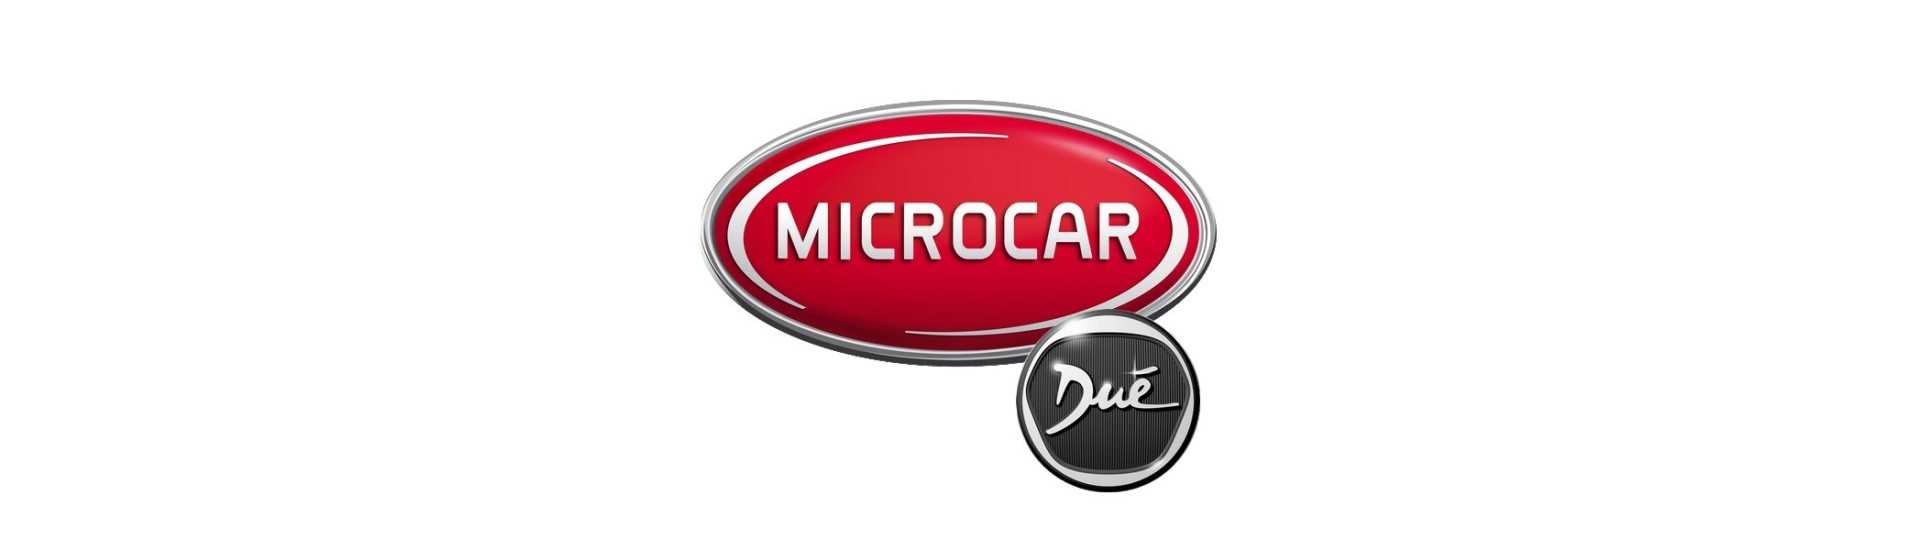 Radar och bakre kamera bättre bilpriser utan licens Microcar Dué